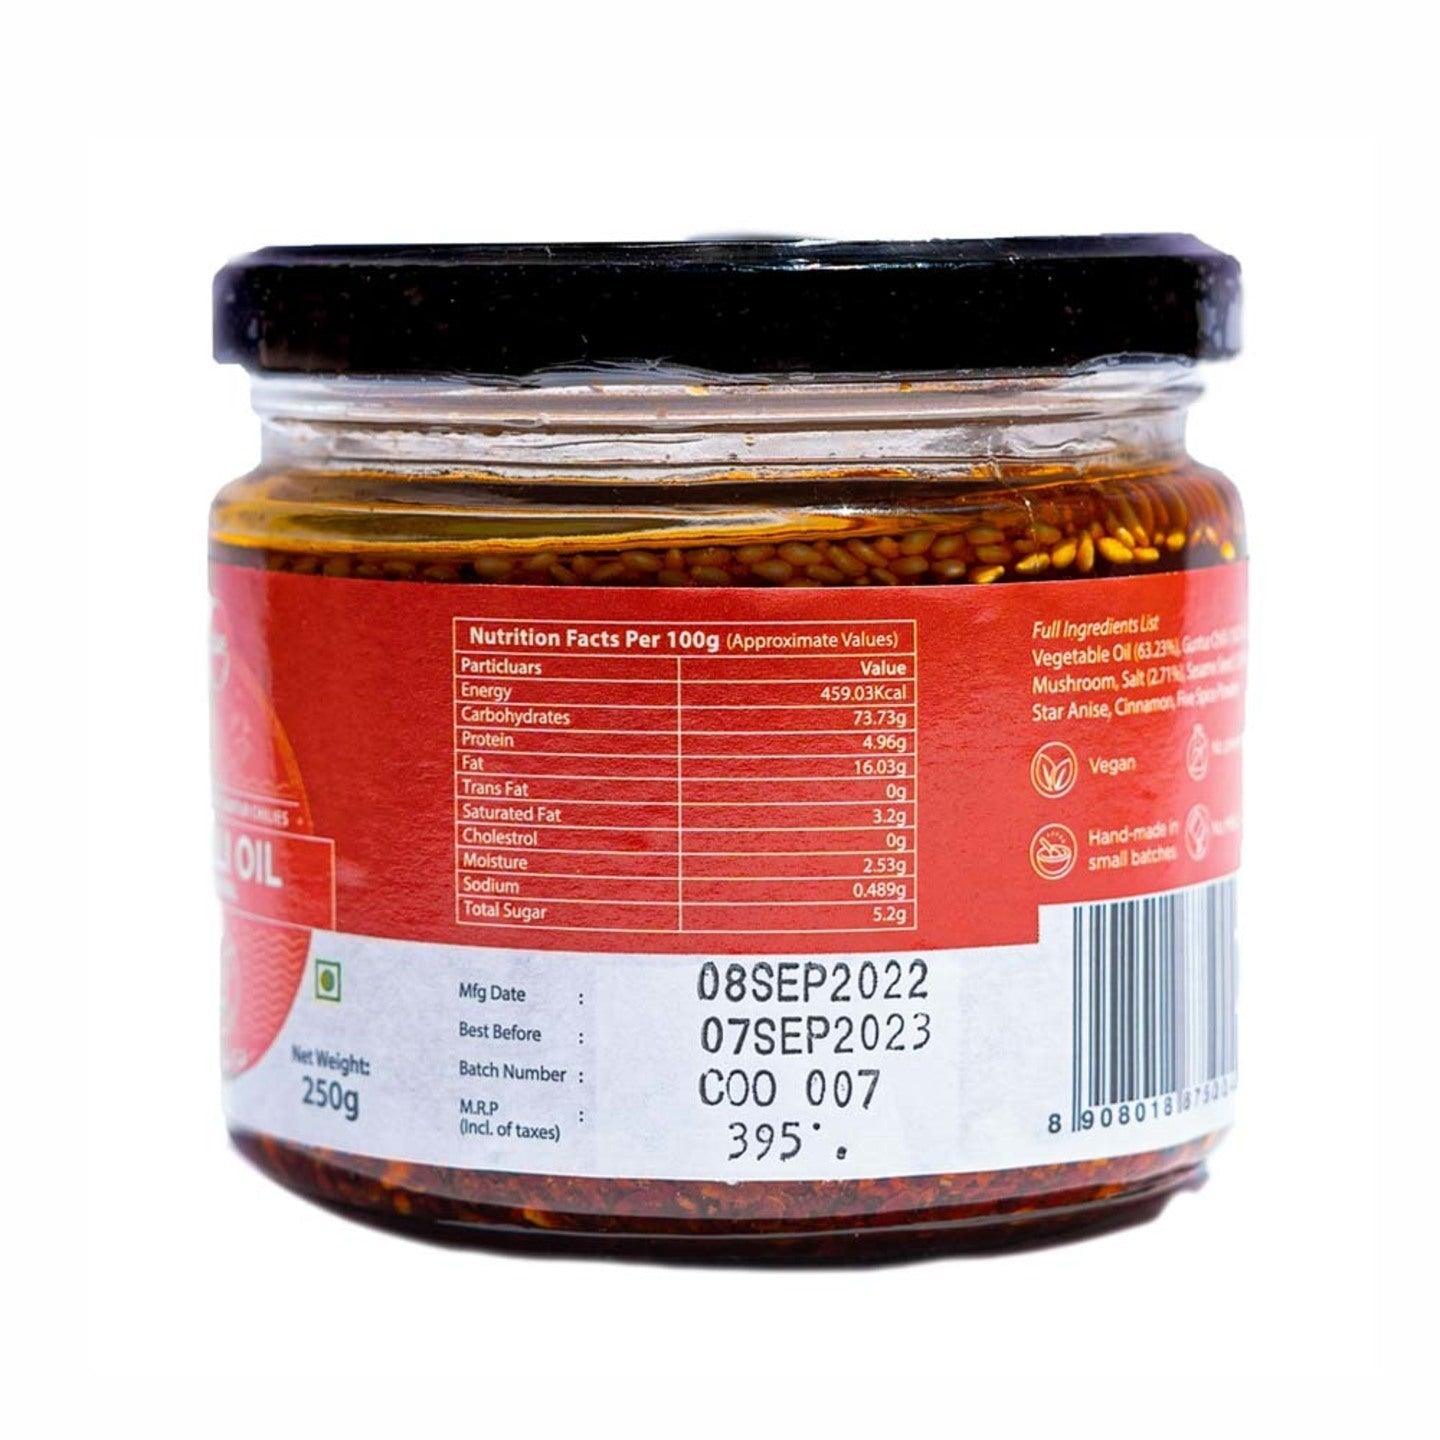 Chilli Oil - Awe Foods - Wildermart